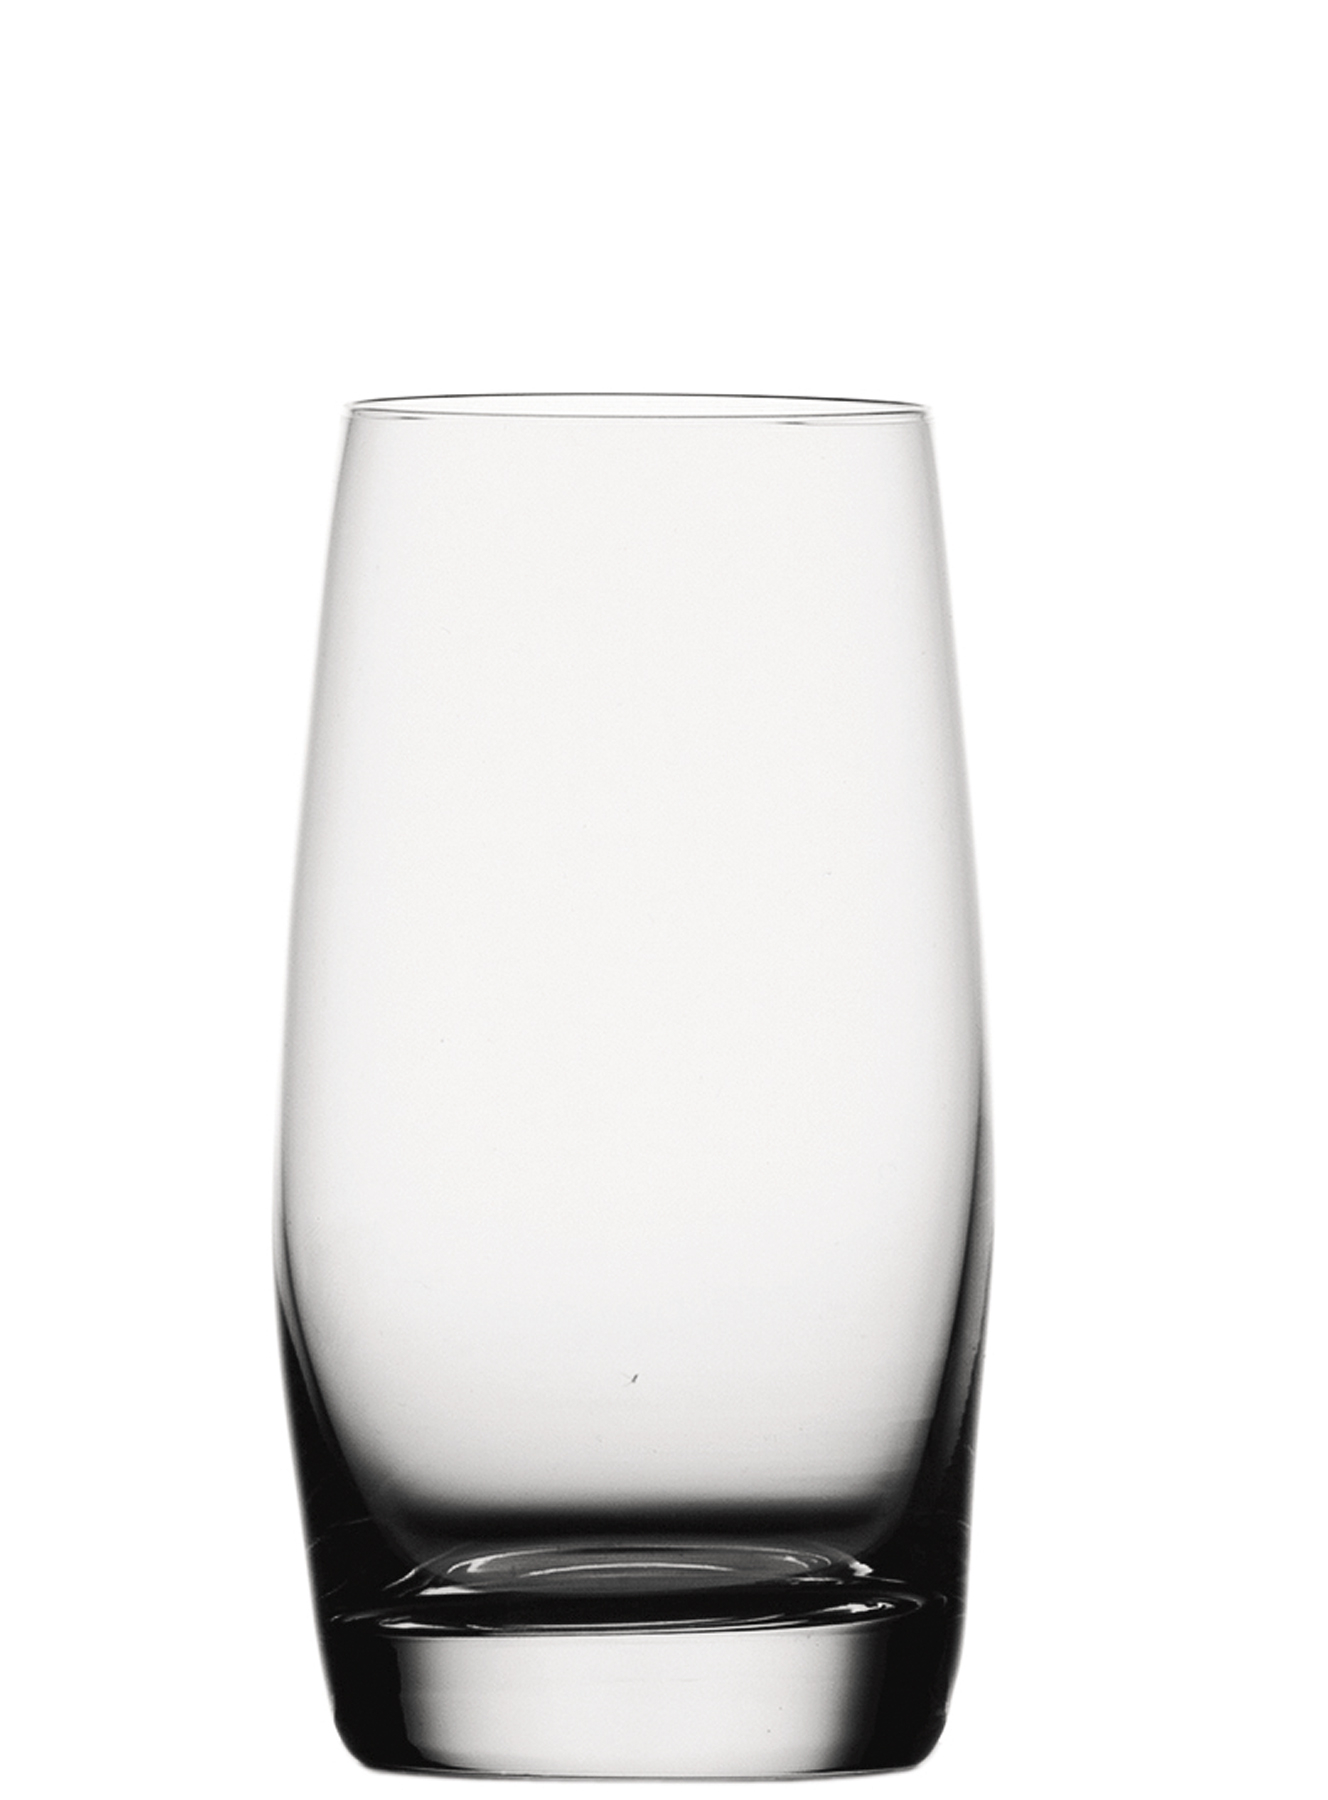 Juice glass Vino Grande, Spiegelau - 325ml (1 pc.)